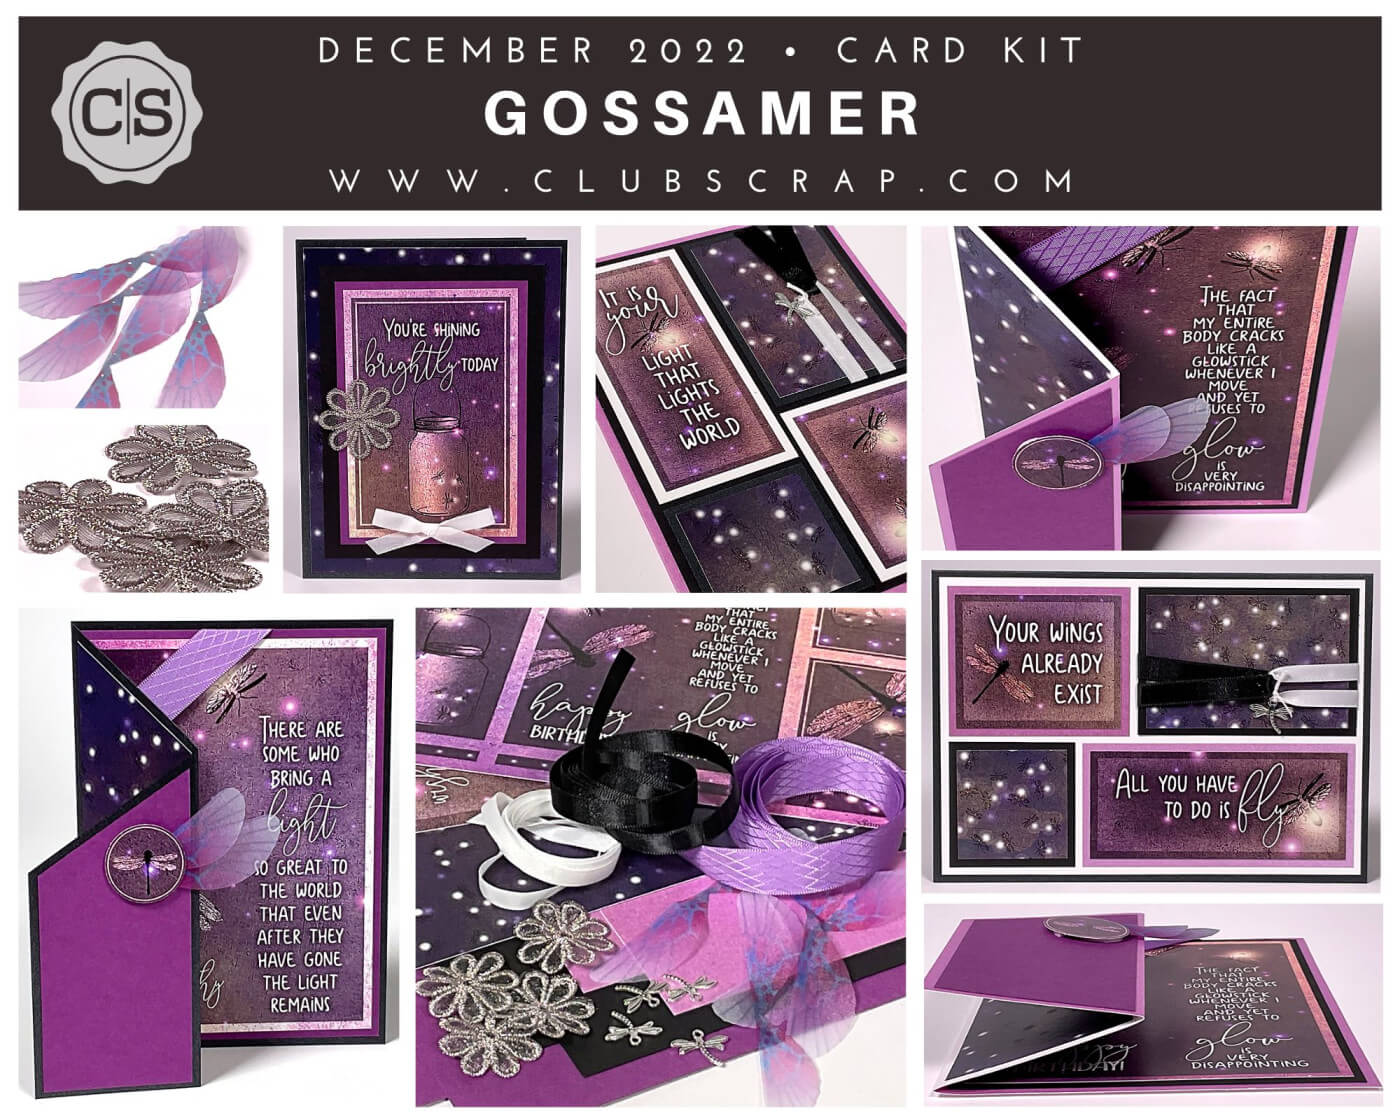 Gossamer Card Kit by Club Scrap #clubscrap